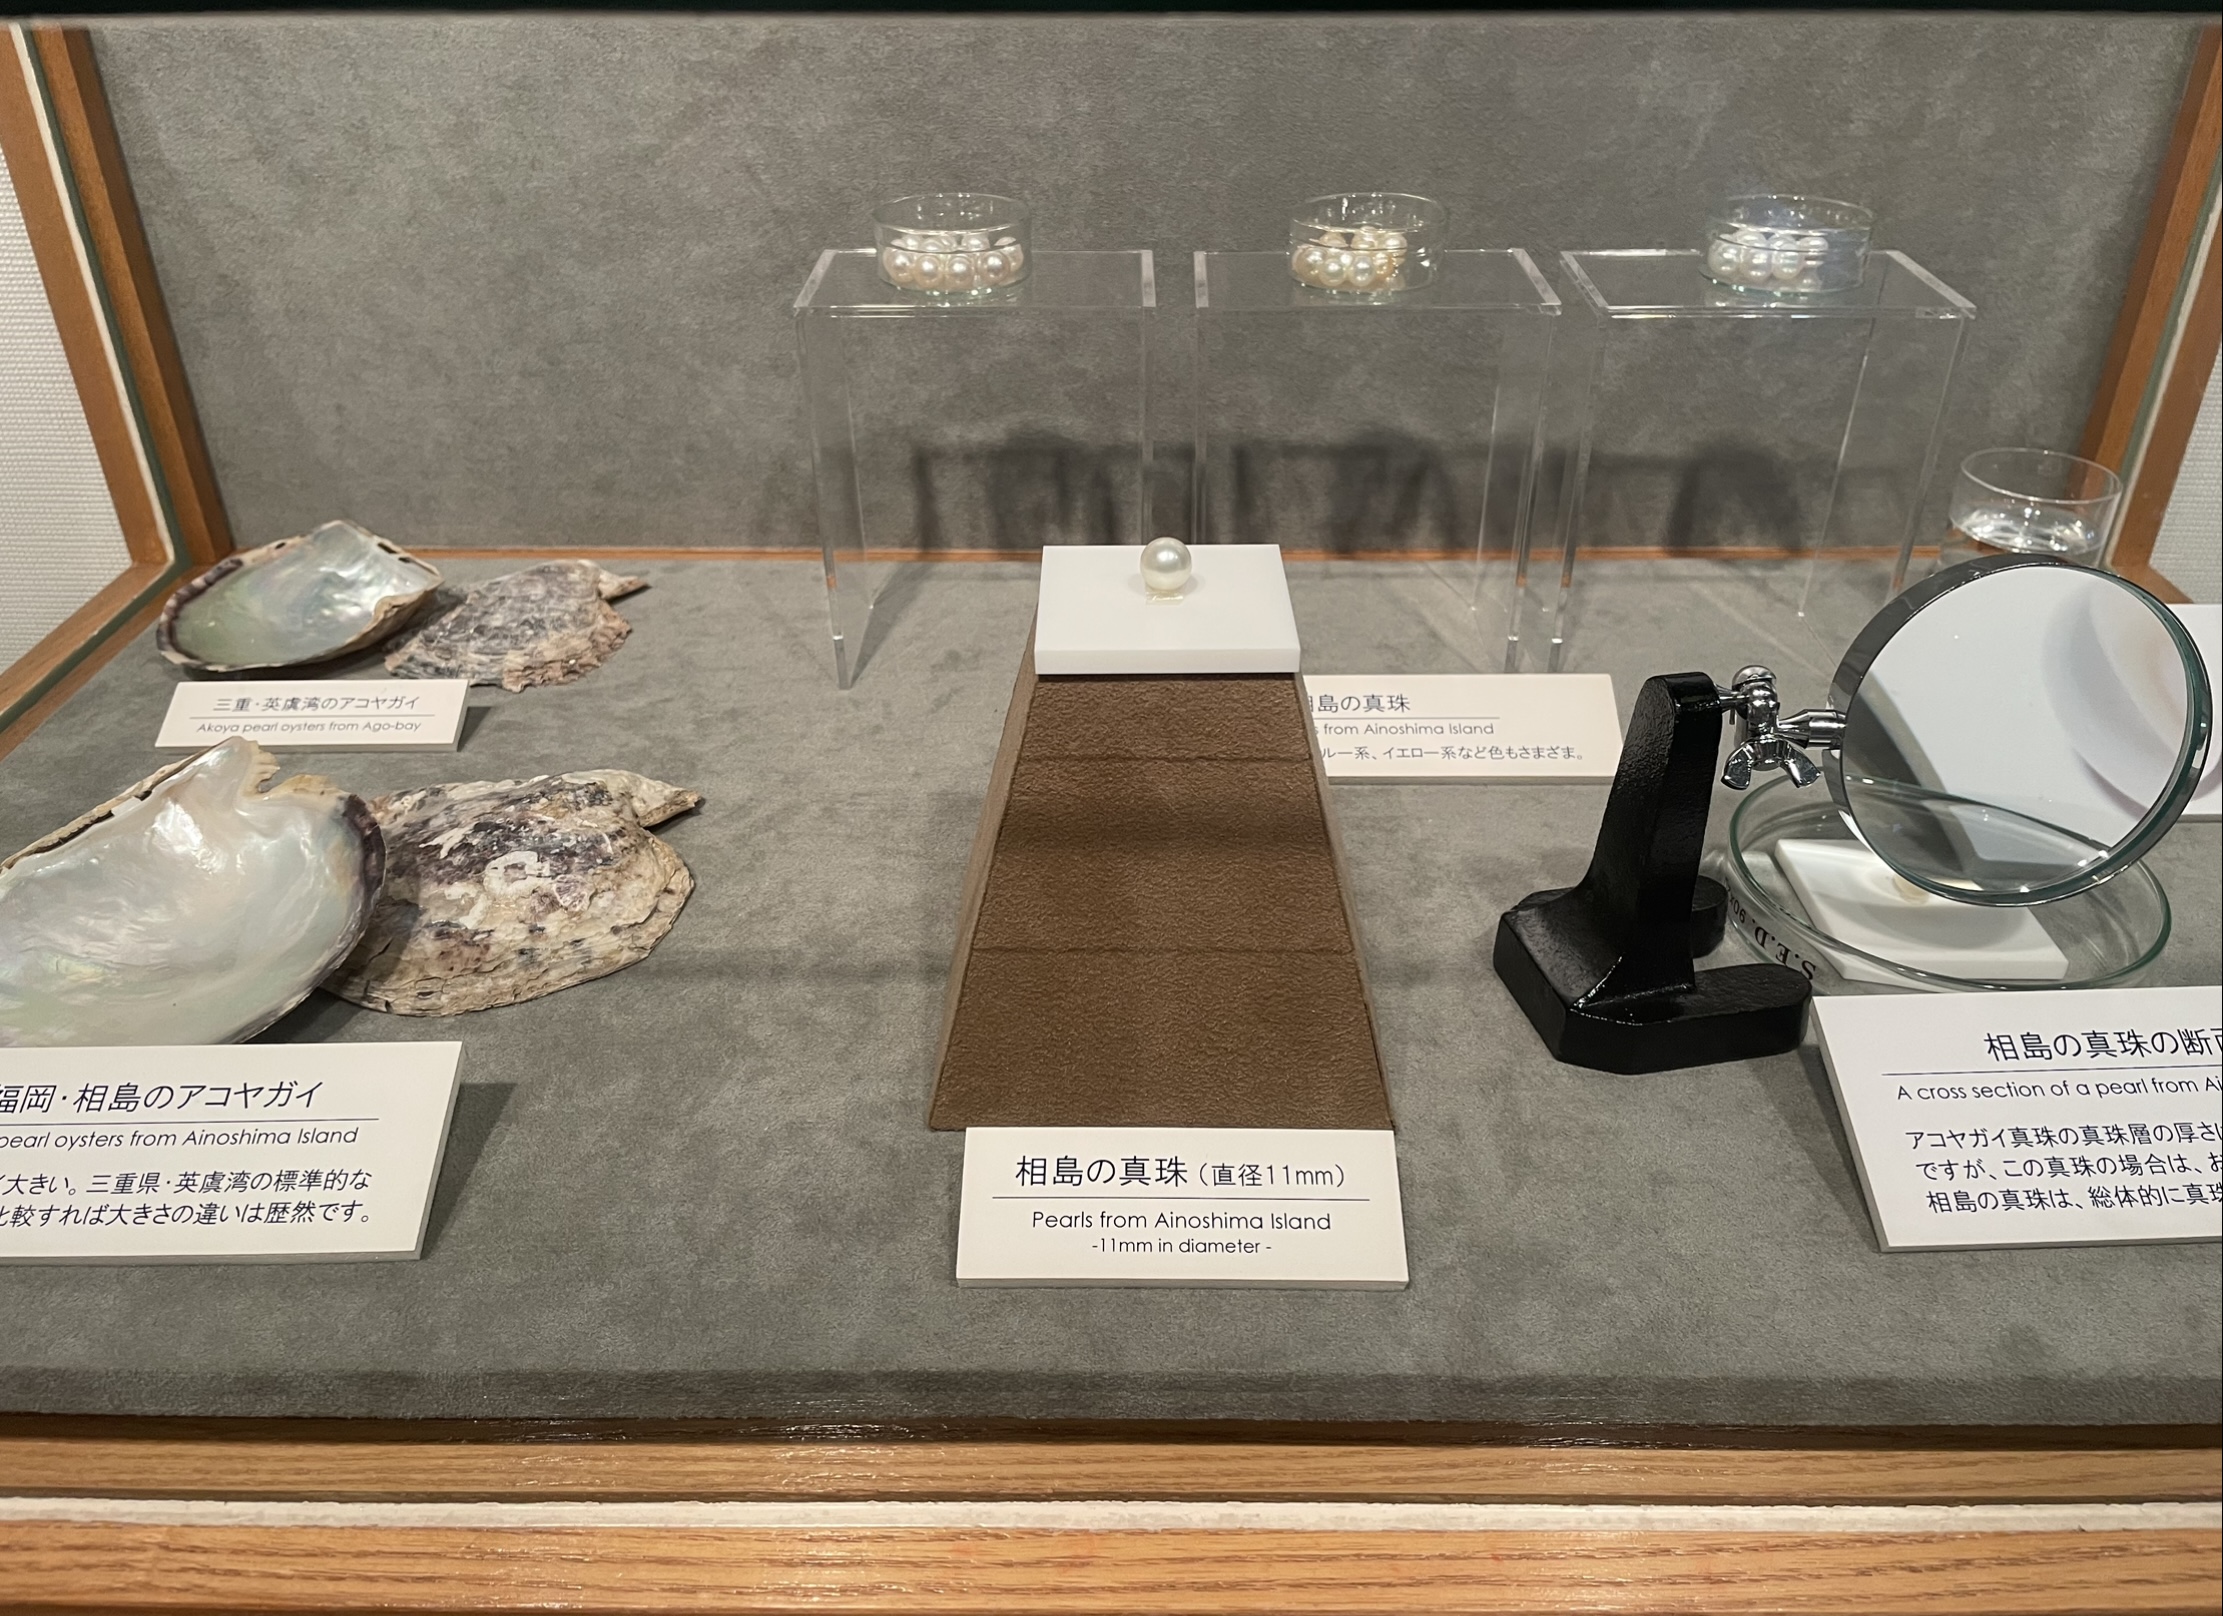 Pearls from Ainoshima Island - Mikimoto Pearl Museum